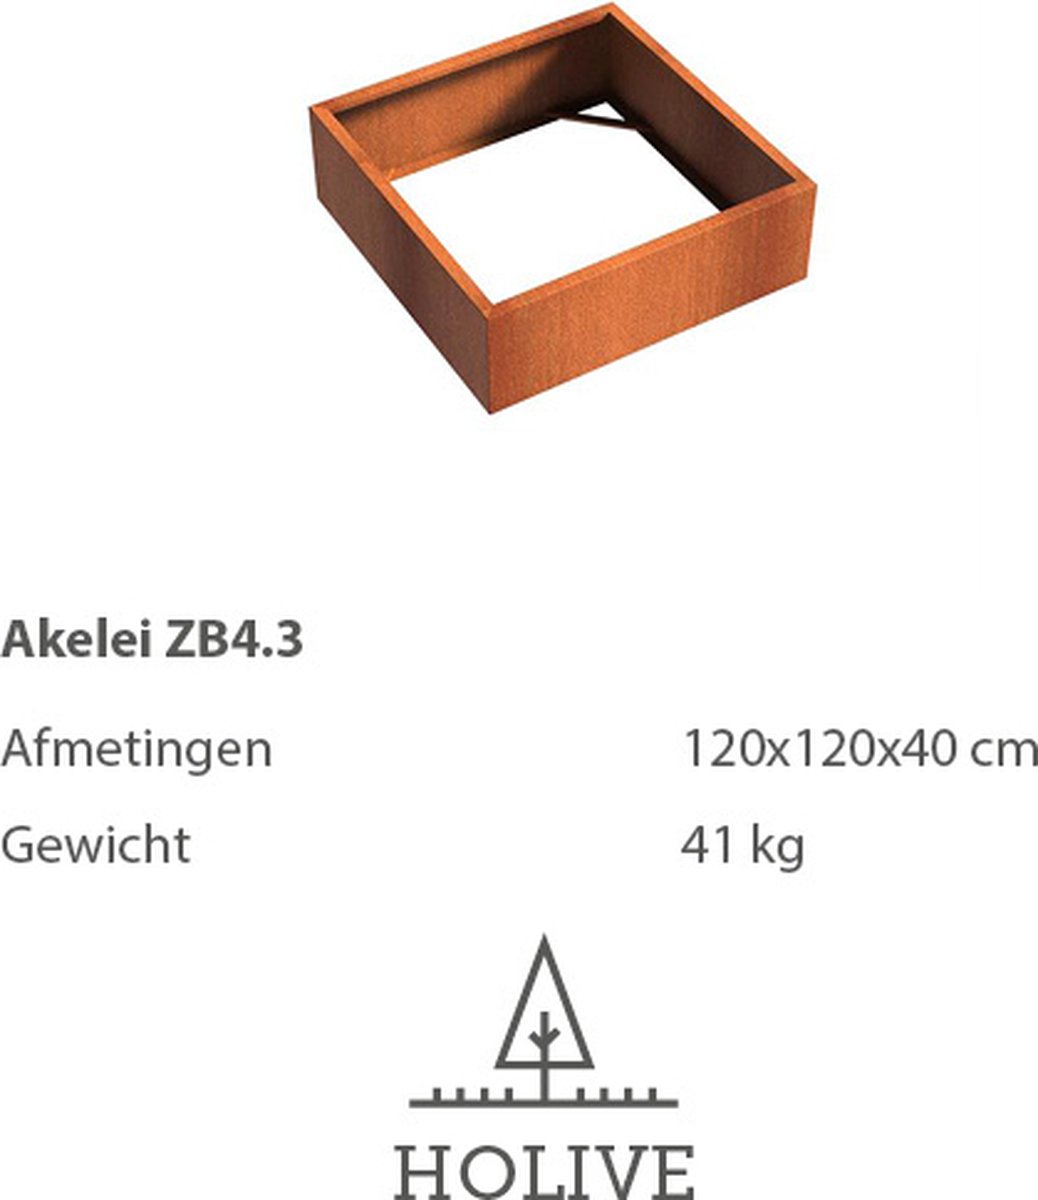 Cortenstaal Akelei ZB4.3 Vierkant zonder bodem 120x120x40 cm. Plantenbak